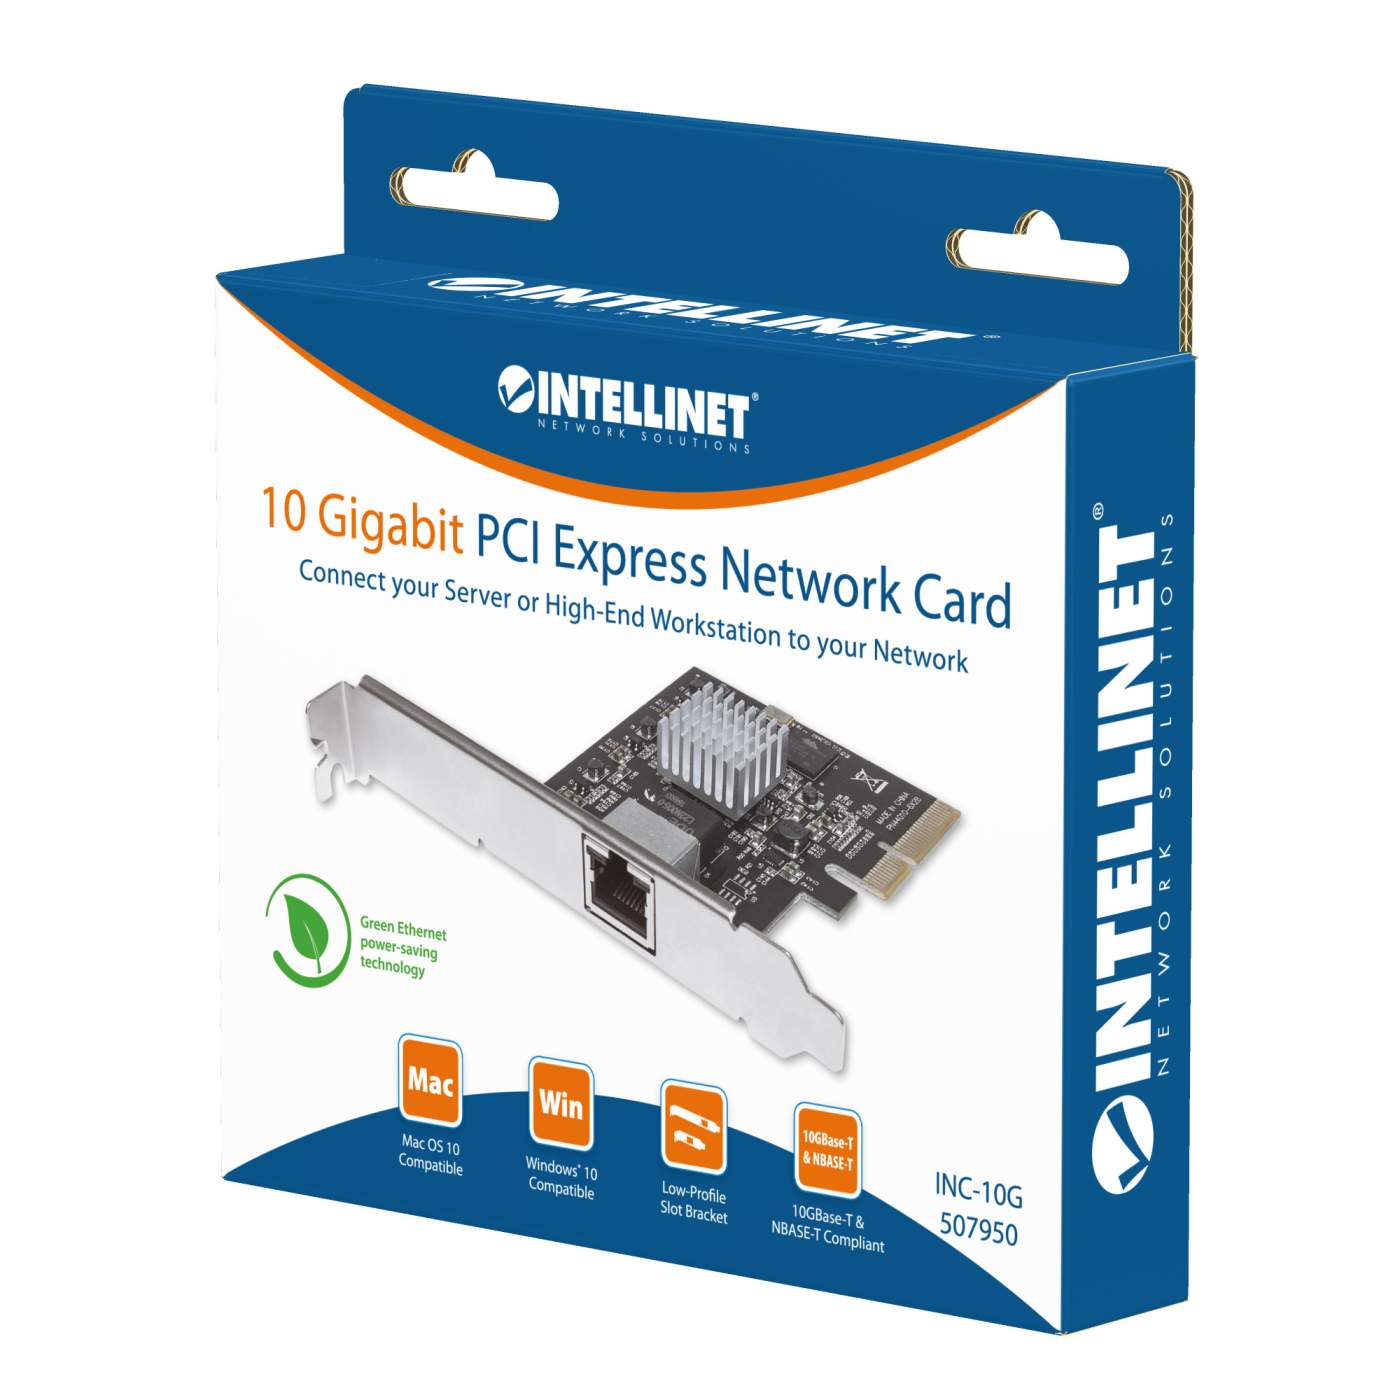 10 Gigabit PCI Express Network Card Packaging Image 2